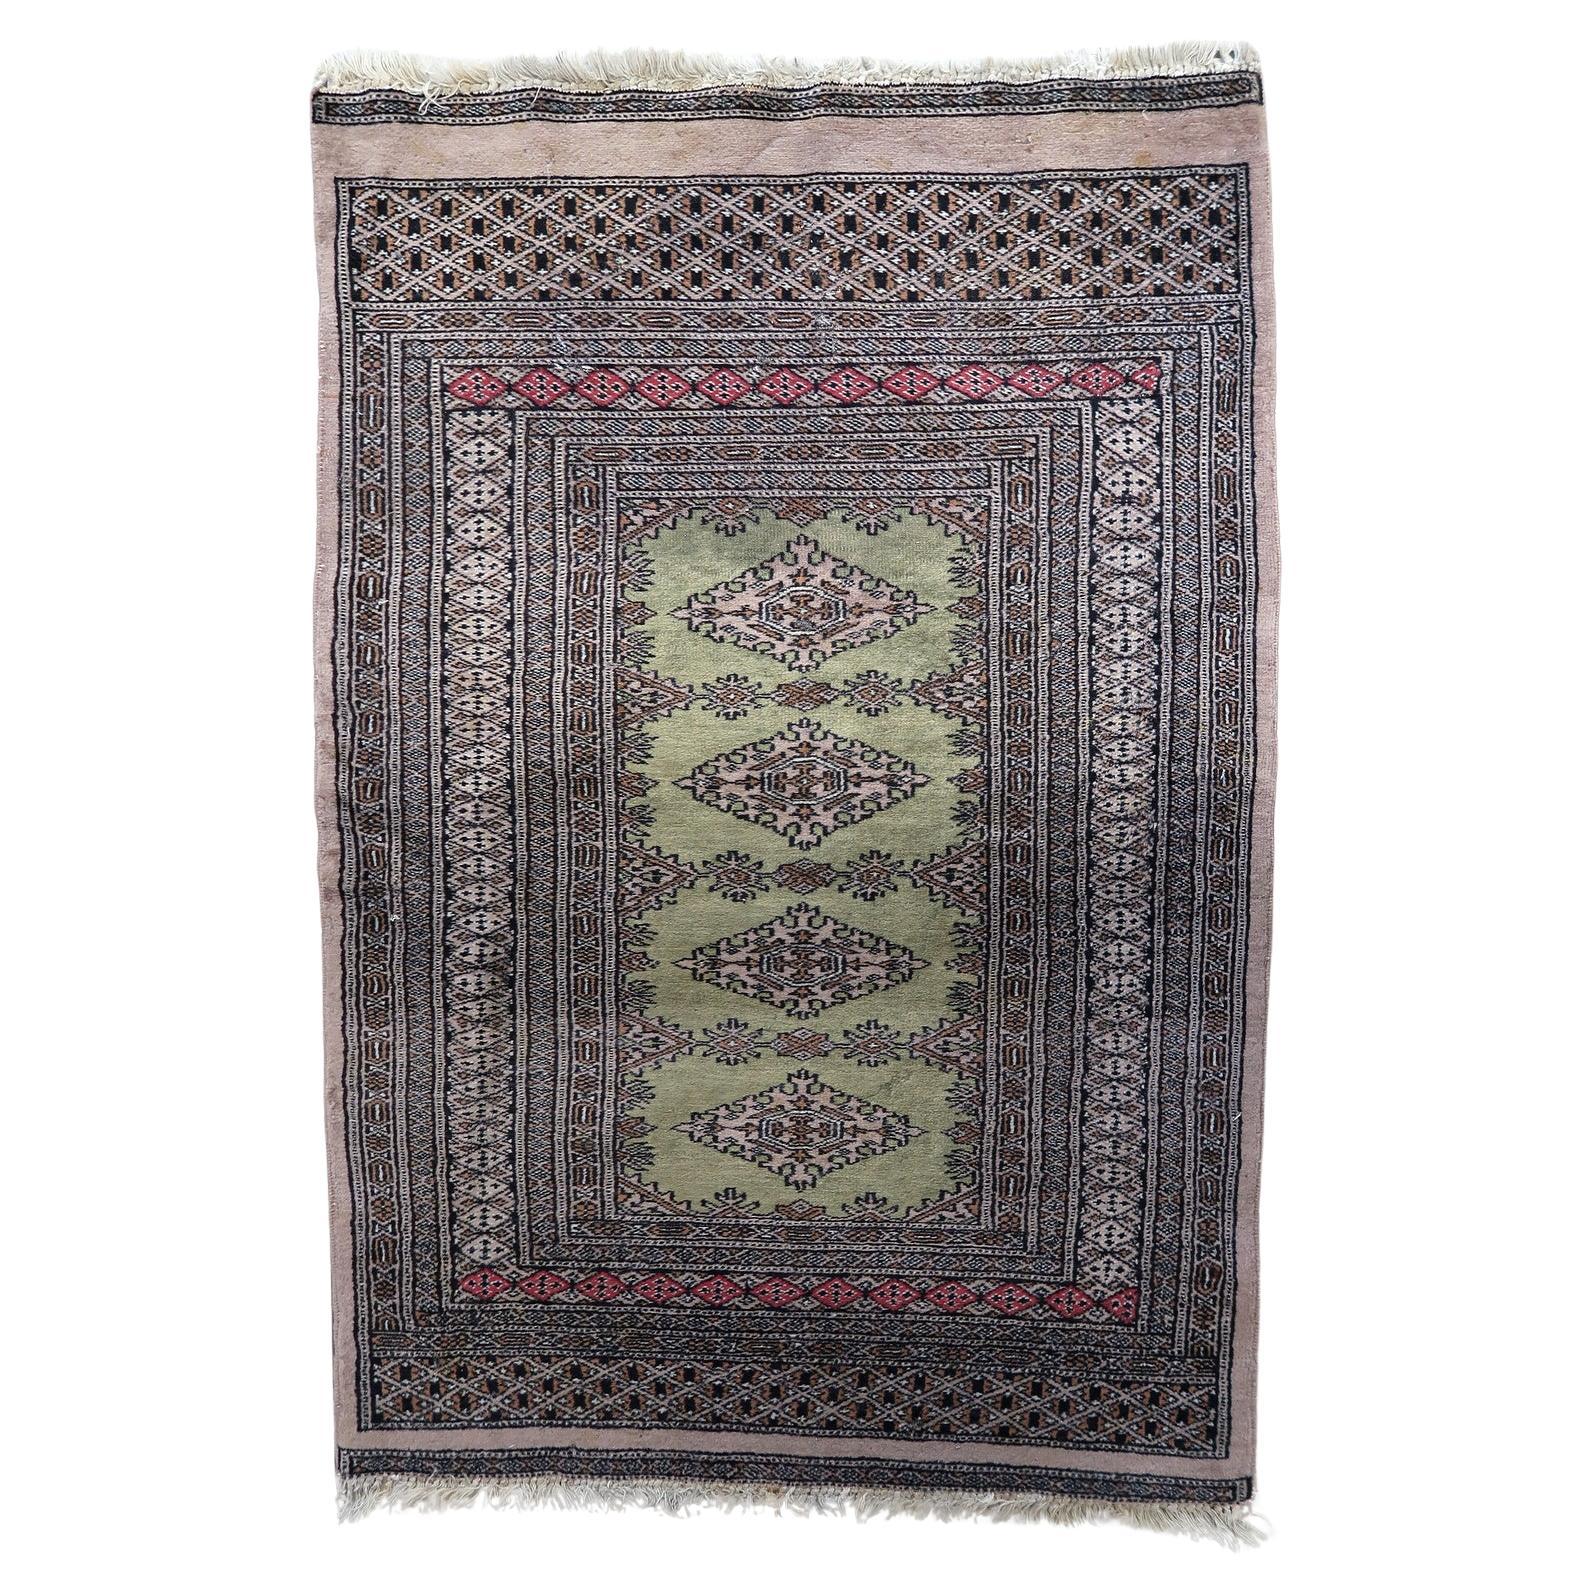 Handmade Vintage Uzbek Bukhara Rug 2.6' x 4', 1950s - 1C1145 For Sale